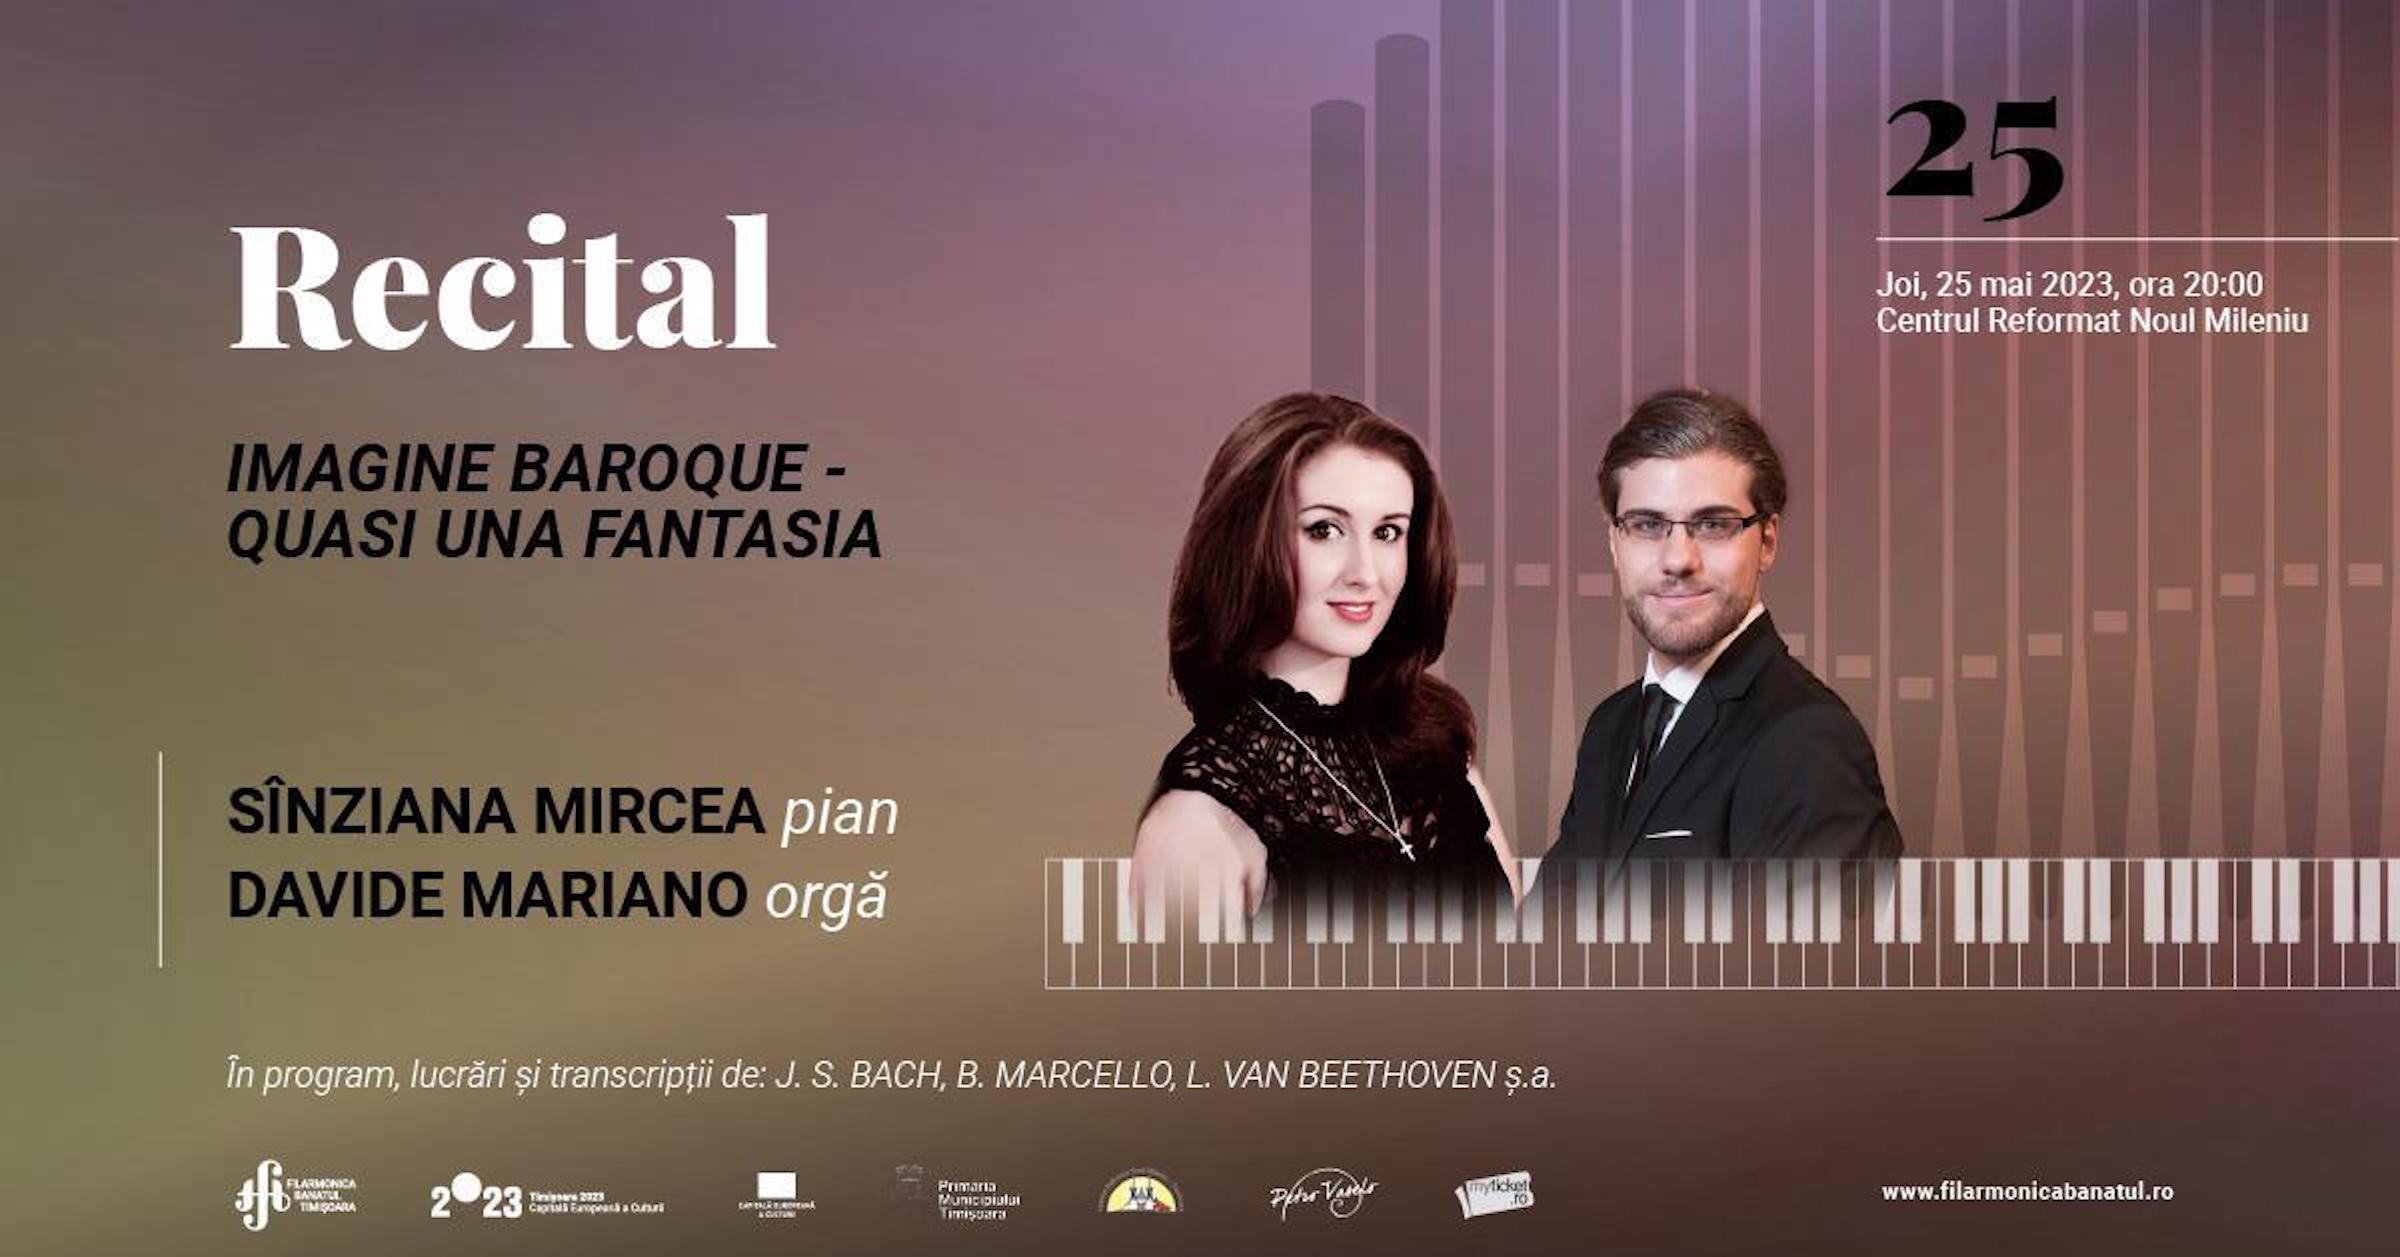 Turneul “Imagine Baroque – Quasi una fantasia” al pianistei Sînziana Mircea începe la Timișoara